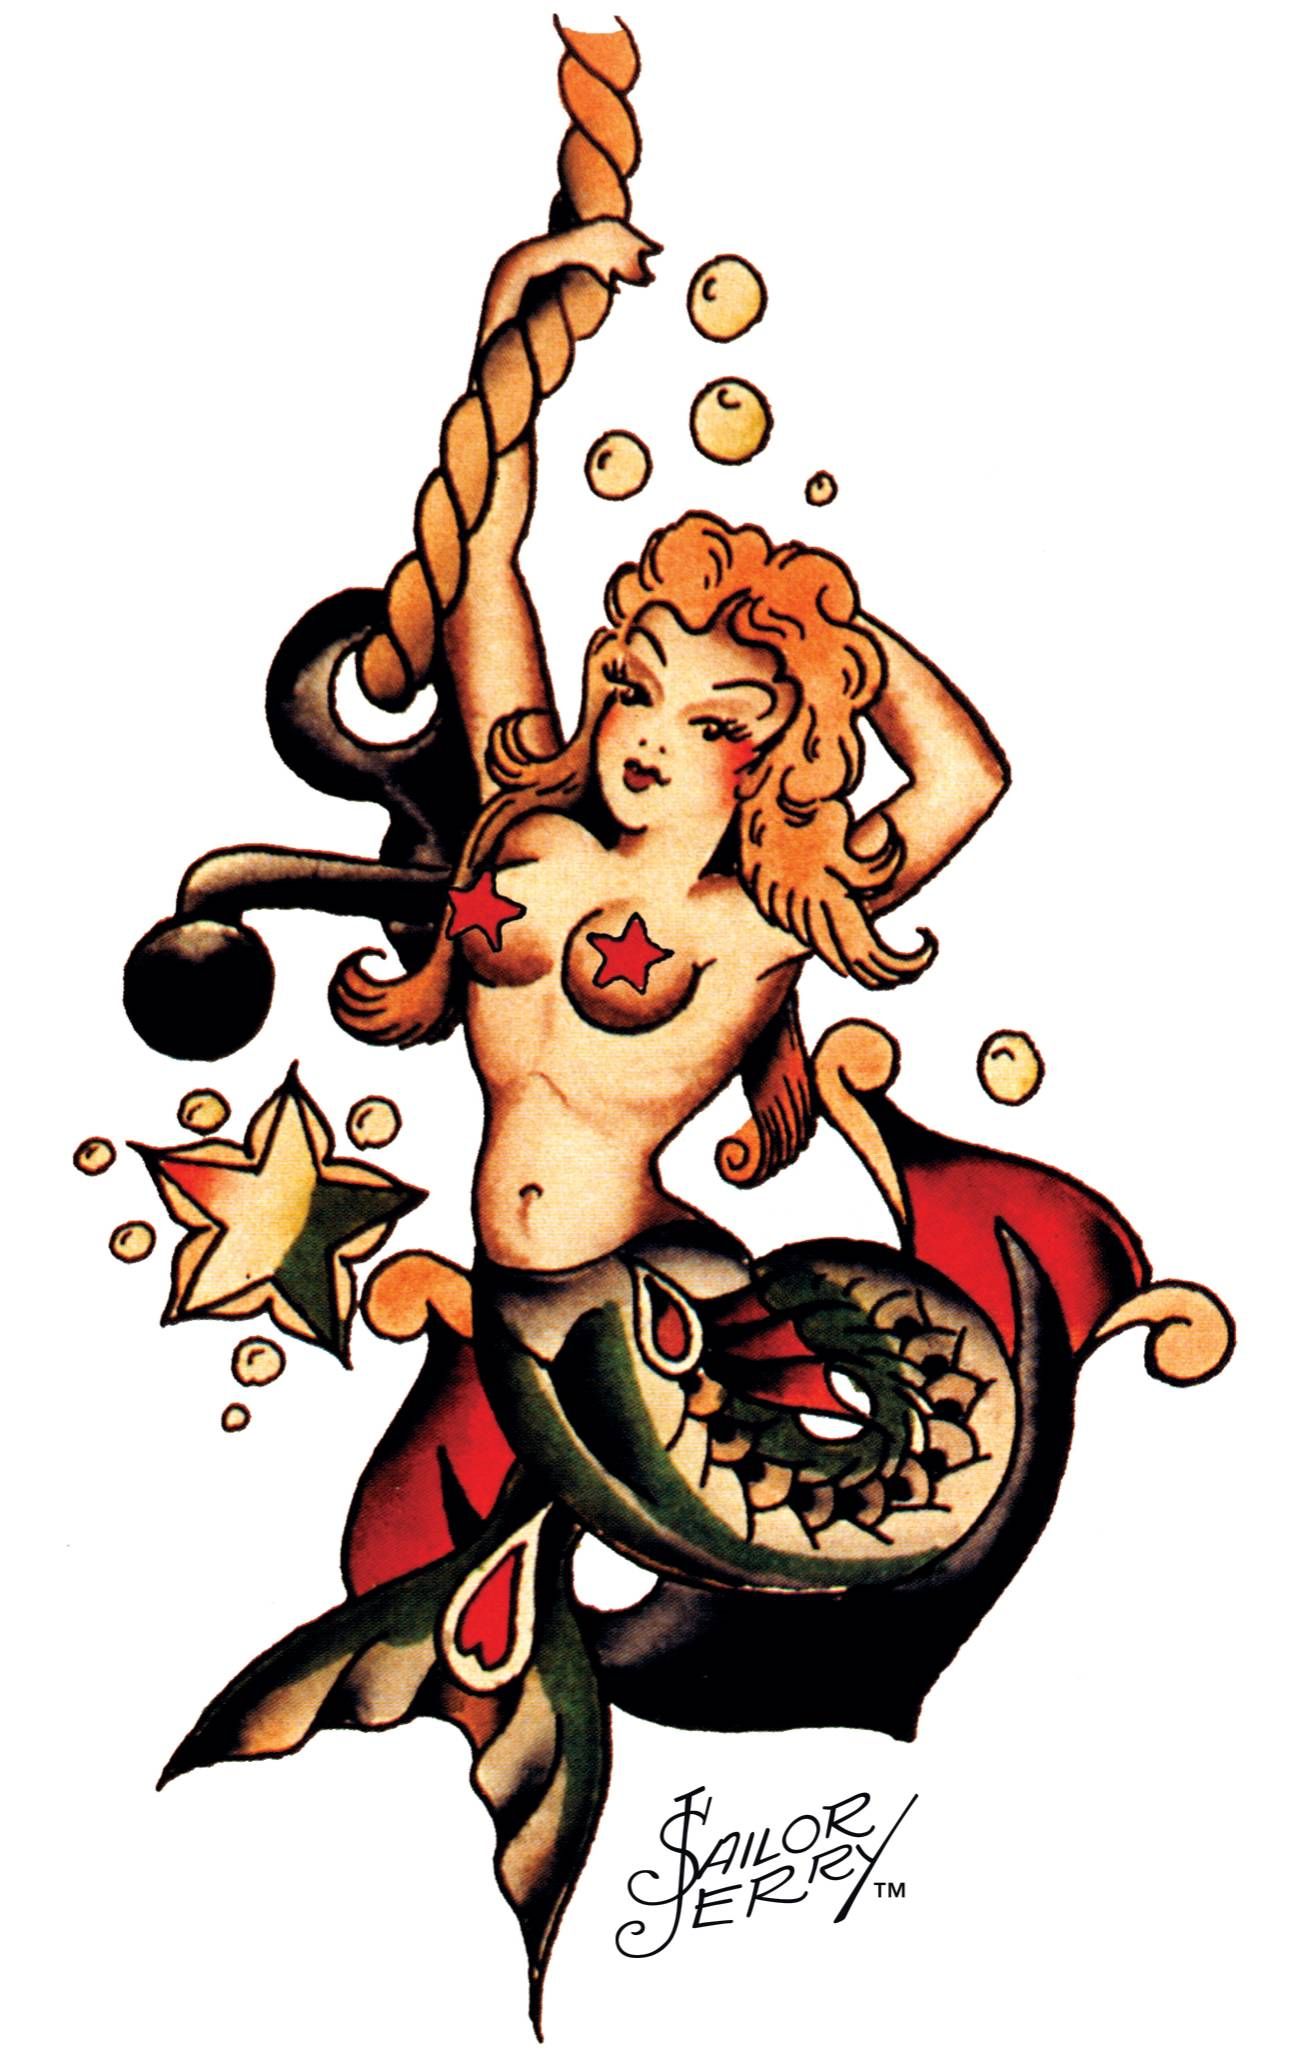 Sailor jerry mermaid.